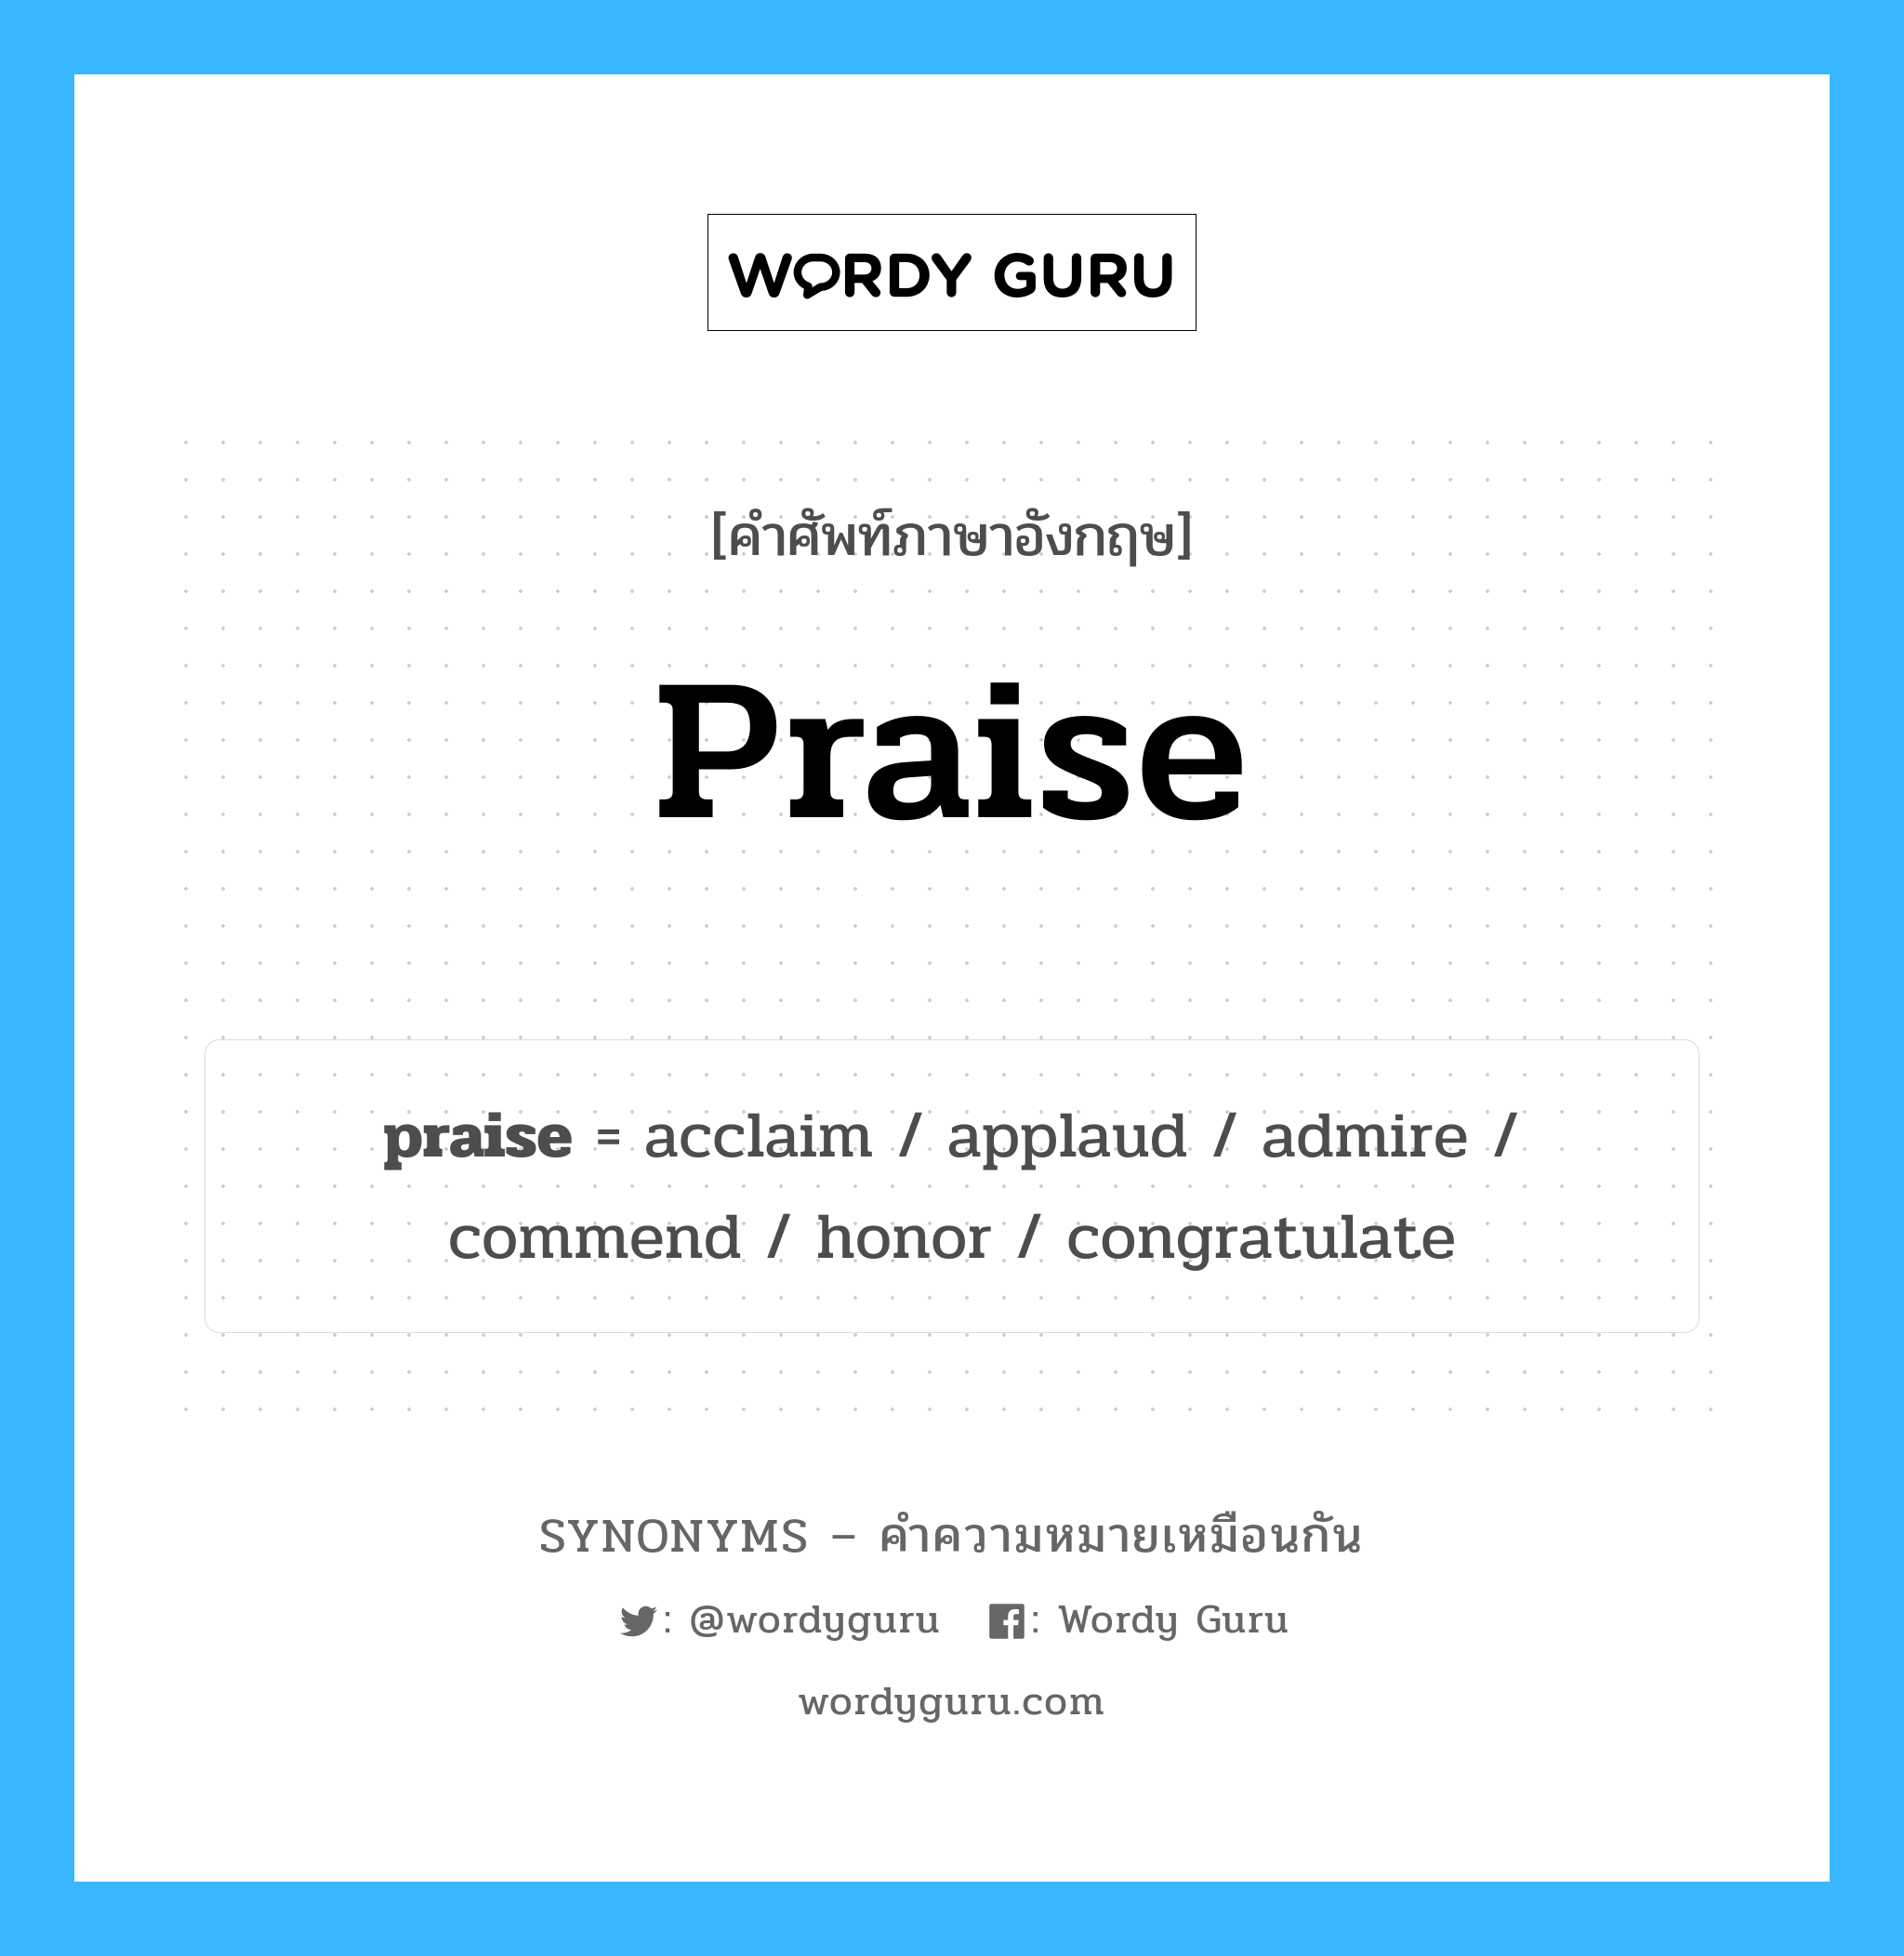 congratulate เป็นหนึ่งใน praise และมีคำอื่น ๆ อีกดังนี้, คำศัพท์ภาษาอังกฤษ congratulate ความหมายคล้ายกันกับ praise แปลว่า ขอแสดงความยินดี หมวด praise